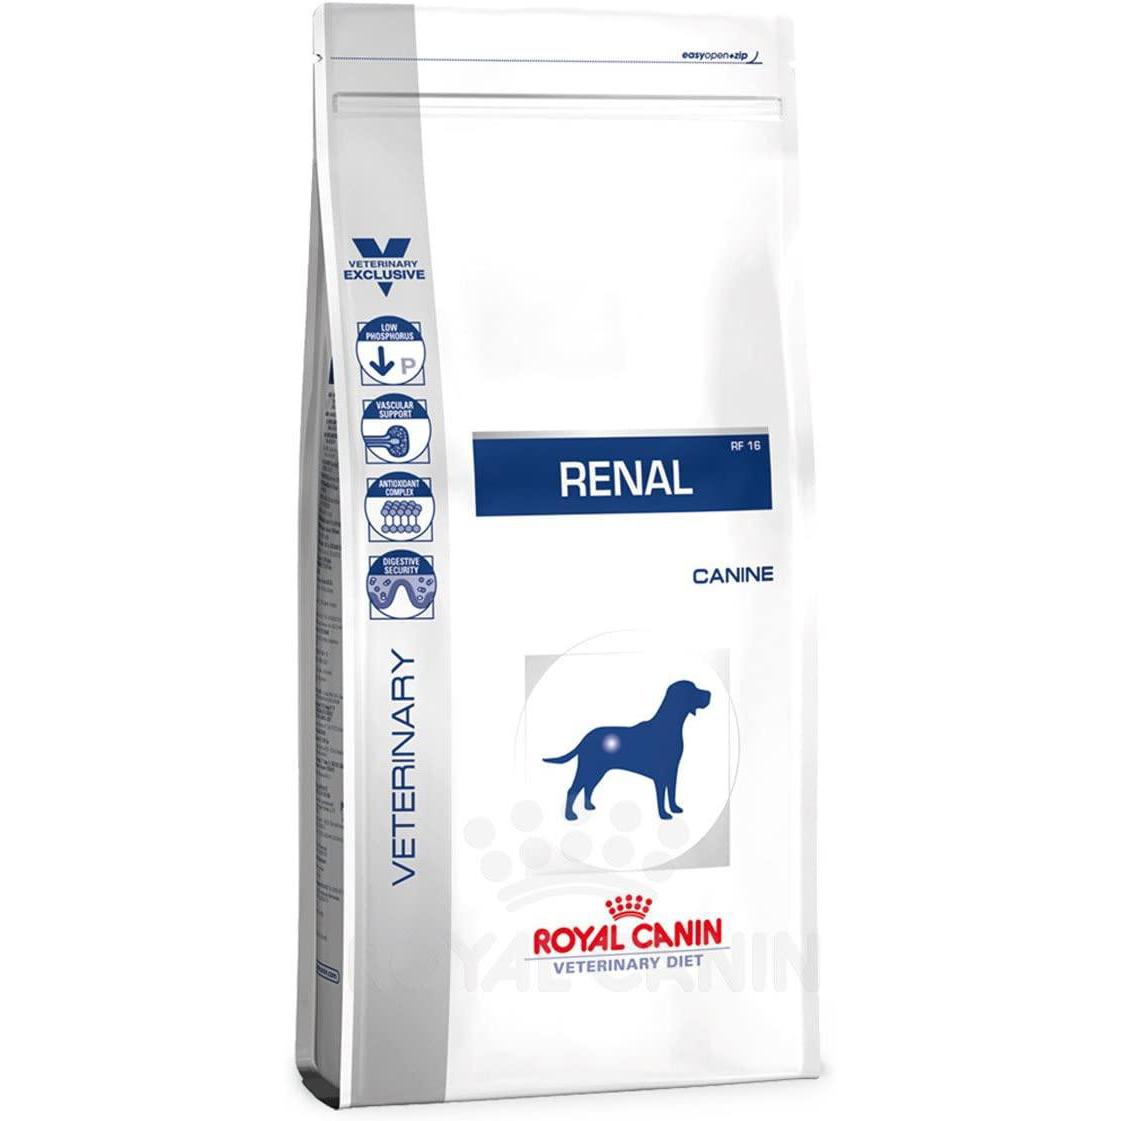 Royal Canin Renal 7kg